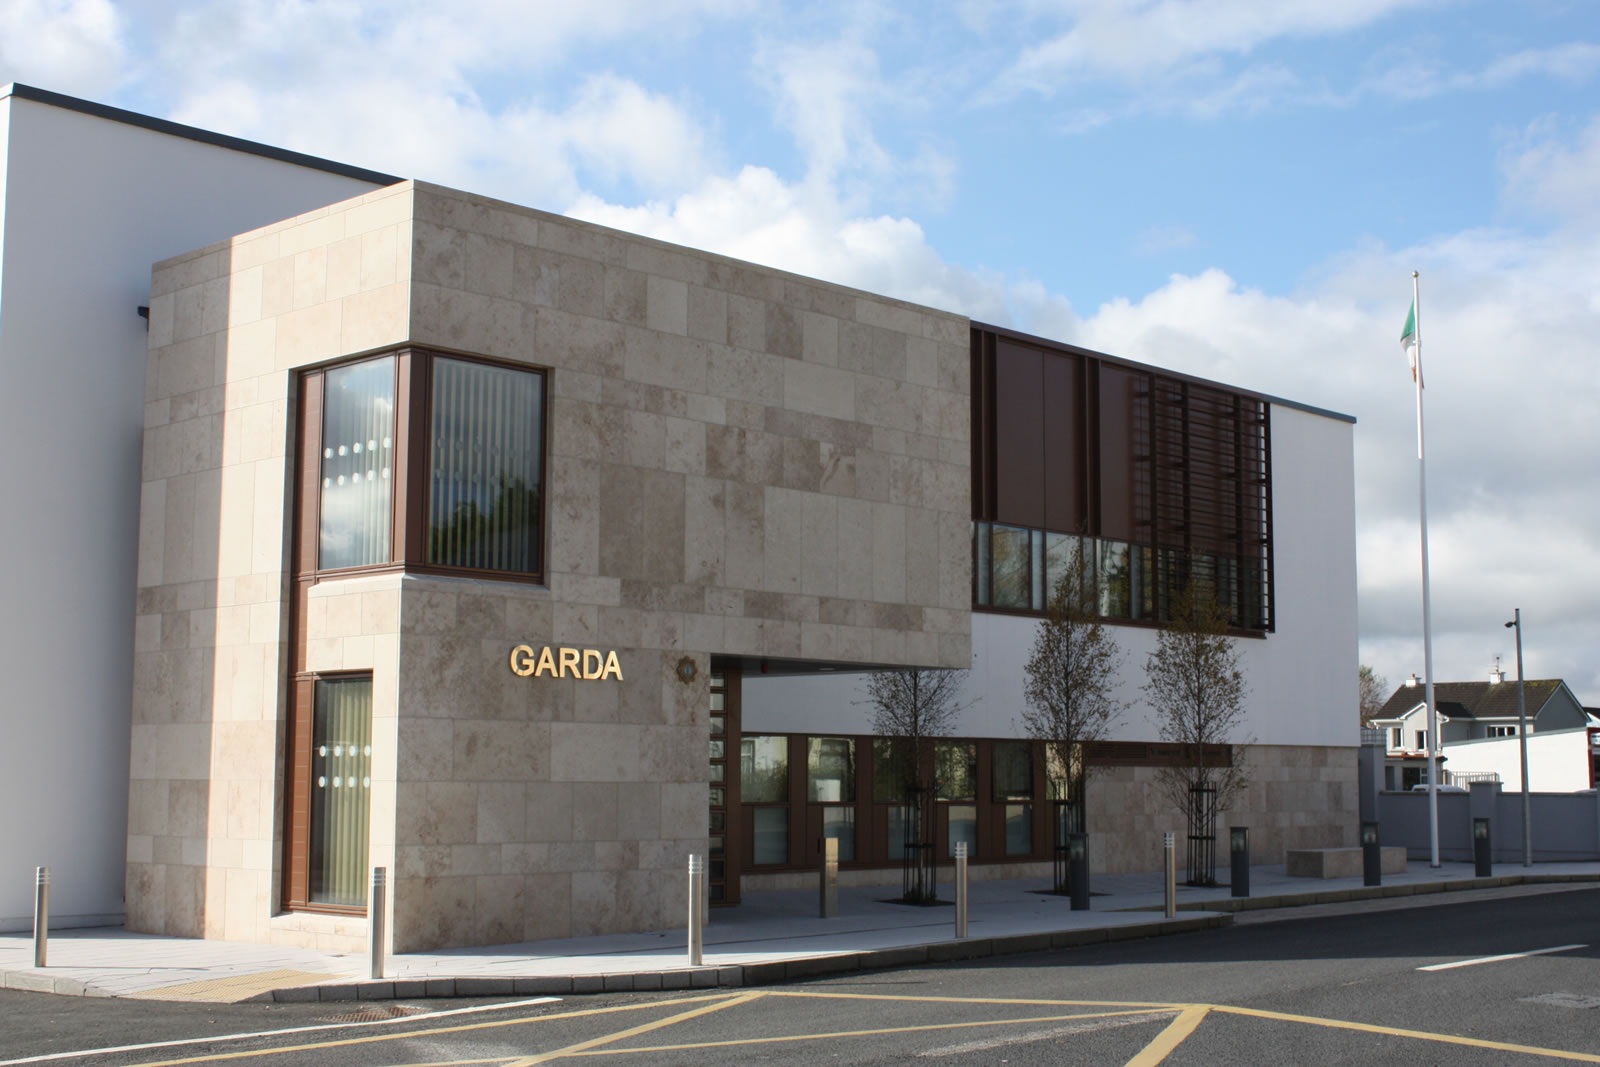 Castleisland Garda Station